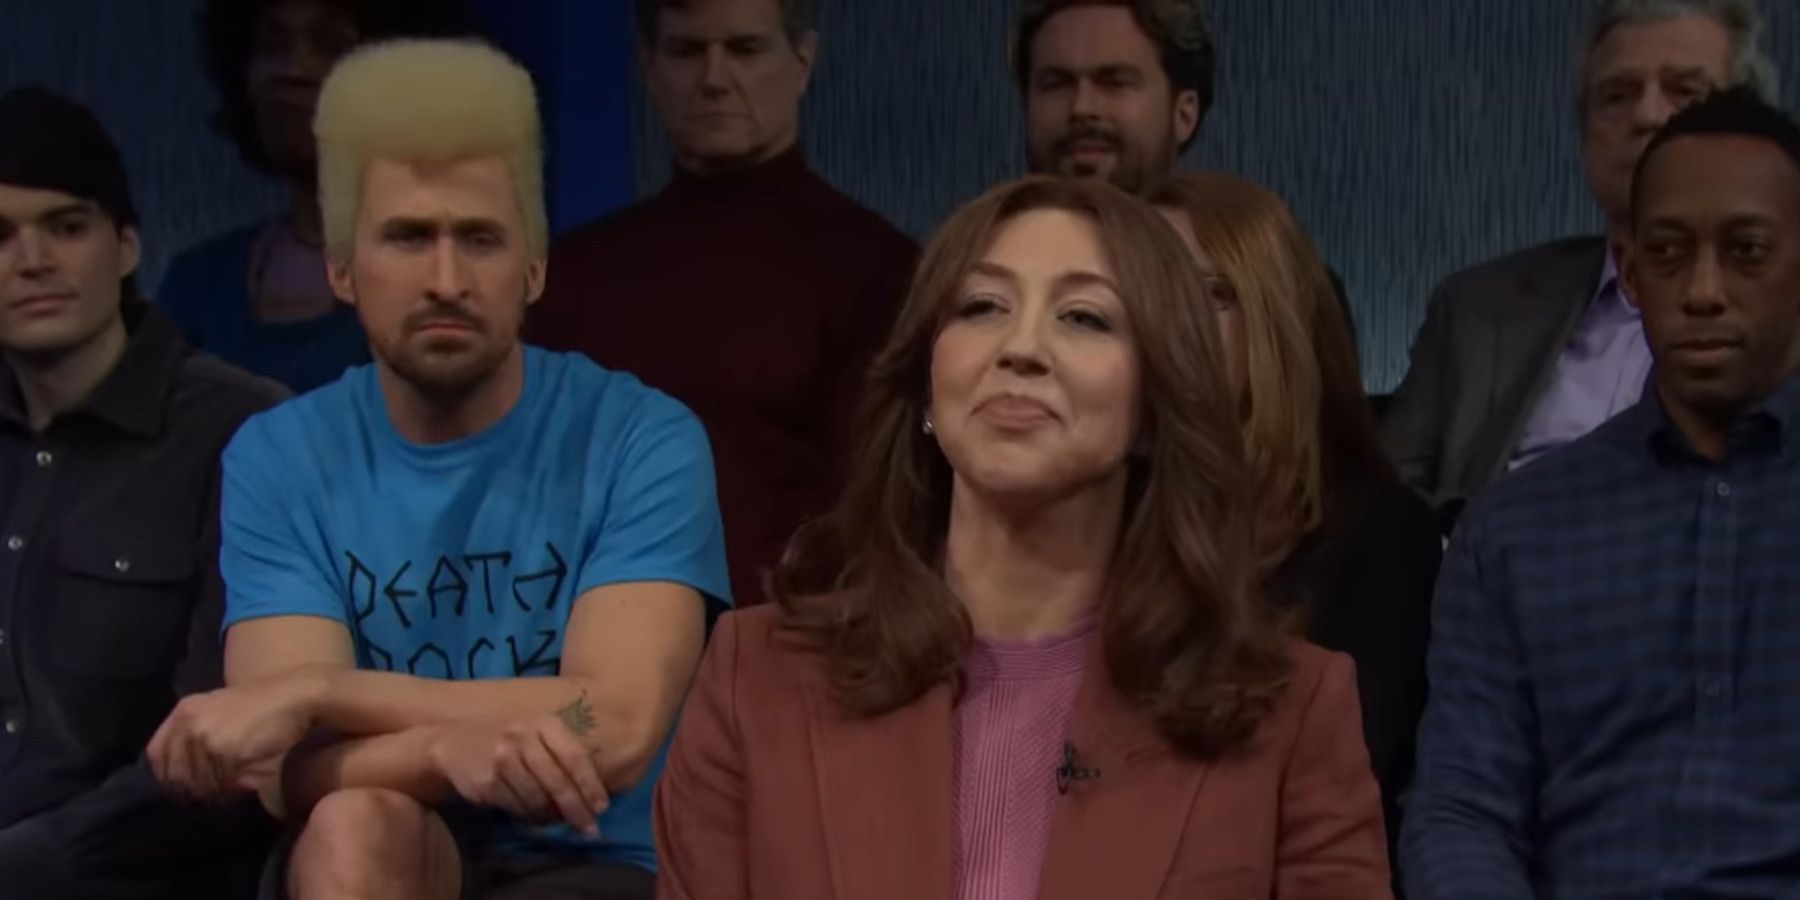 Saturday Night Live Beavis and Butthead Heidi Gardner with Ryan Gosling playing Beavis in the background 